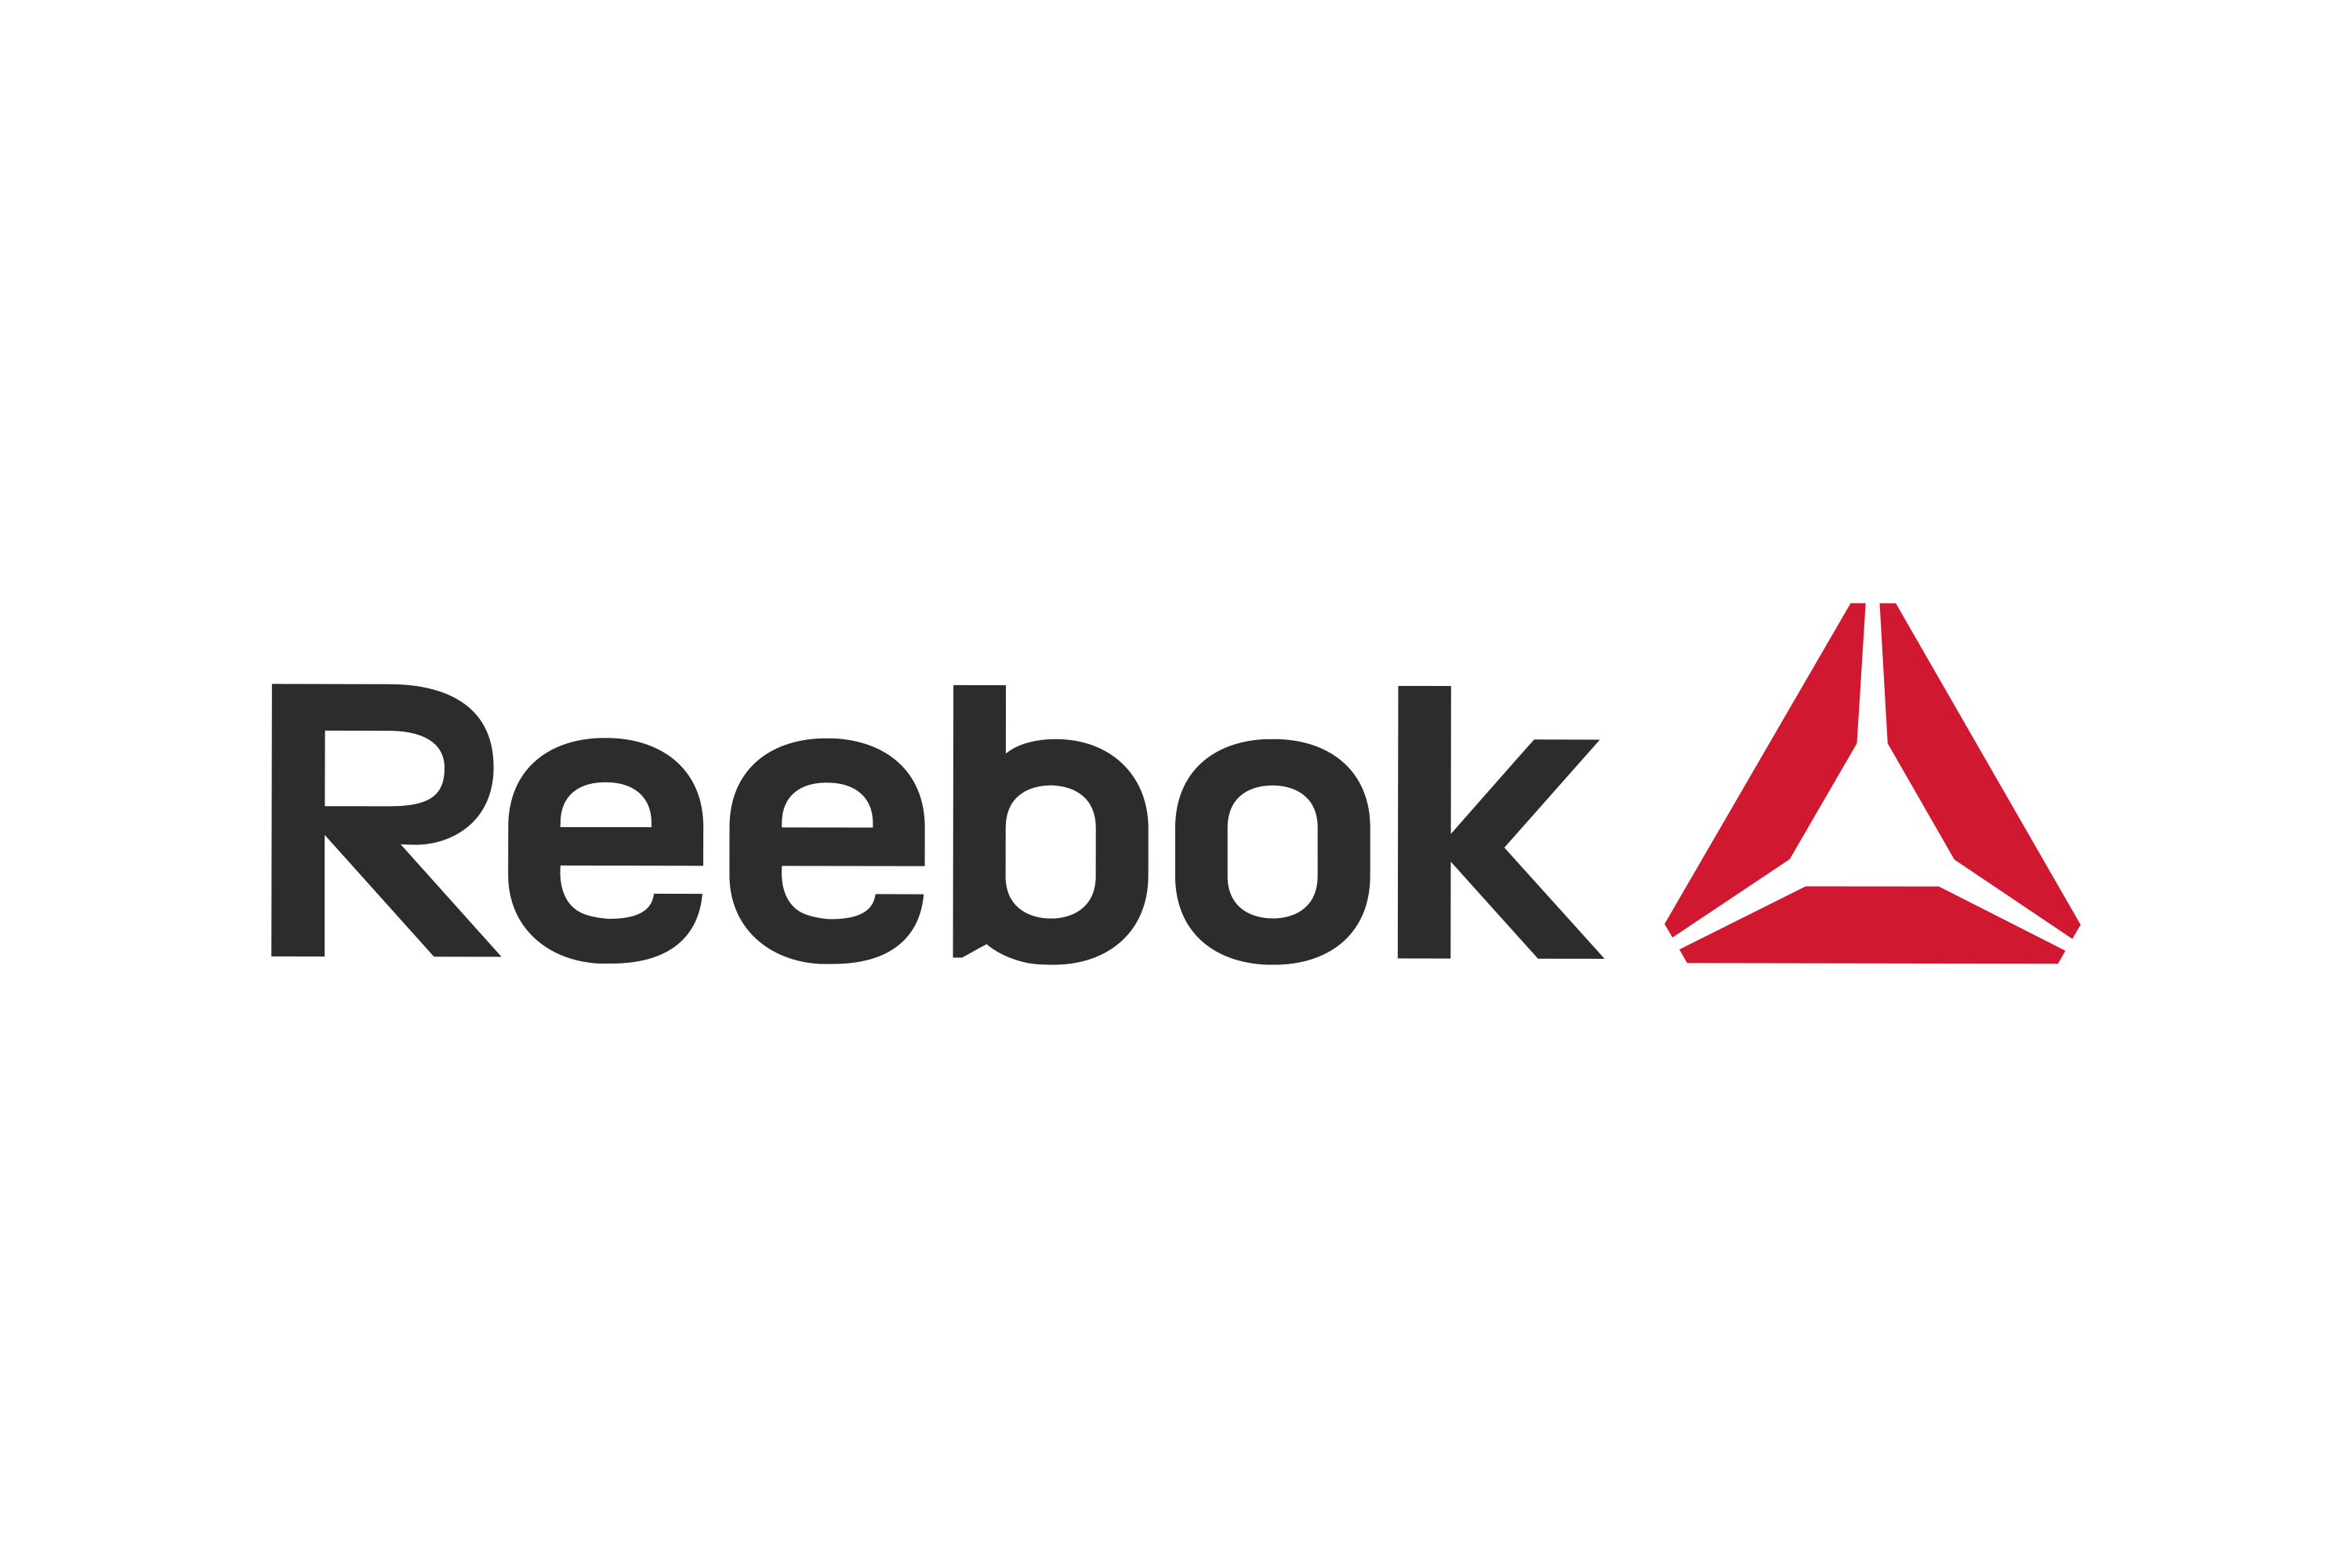 Reebok Logo - Free download in format